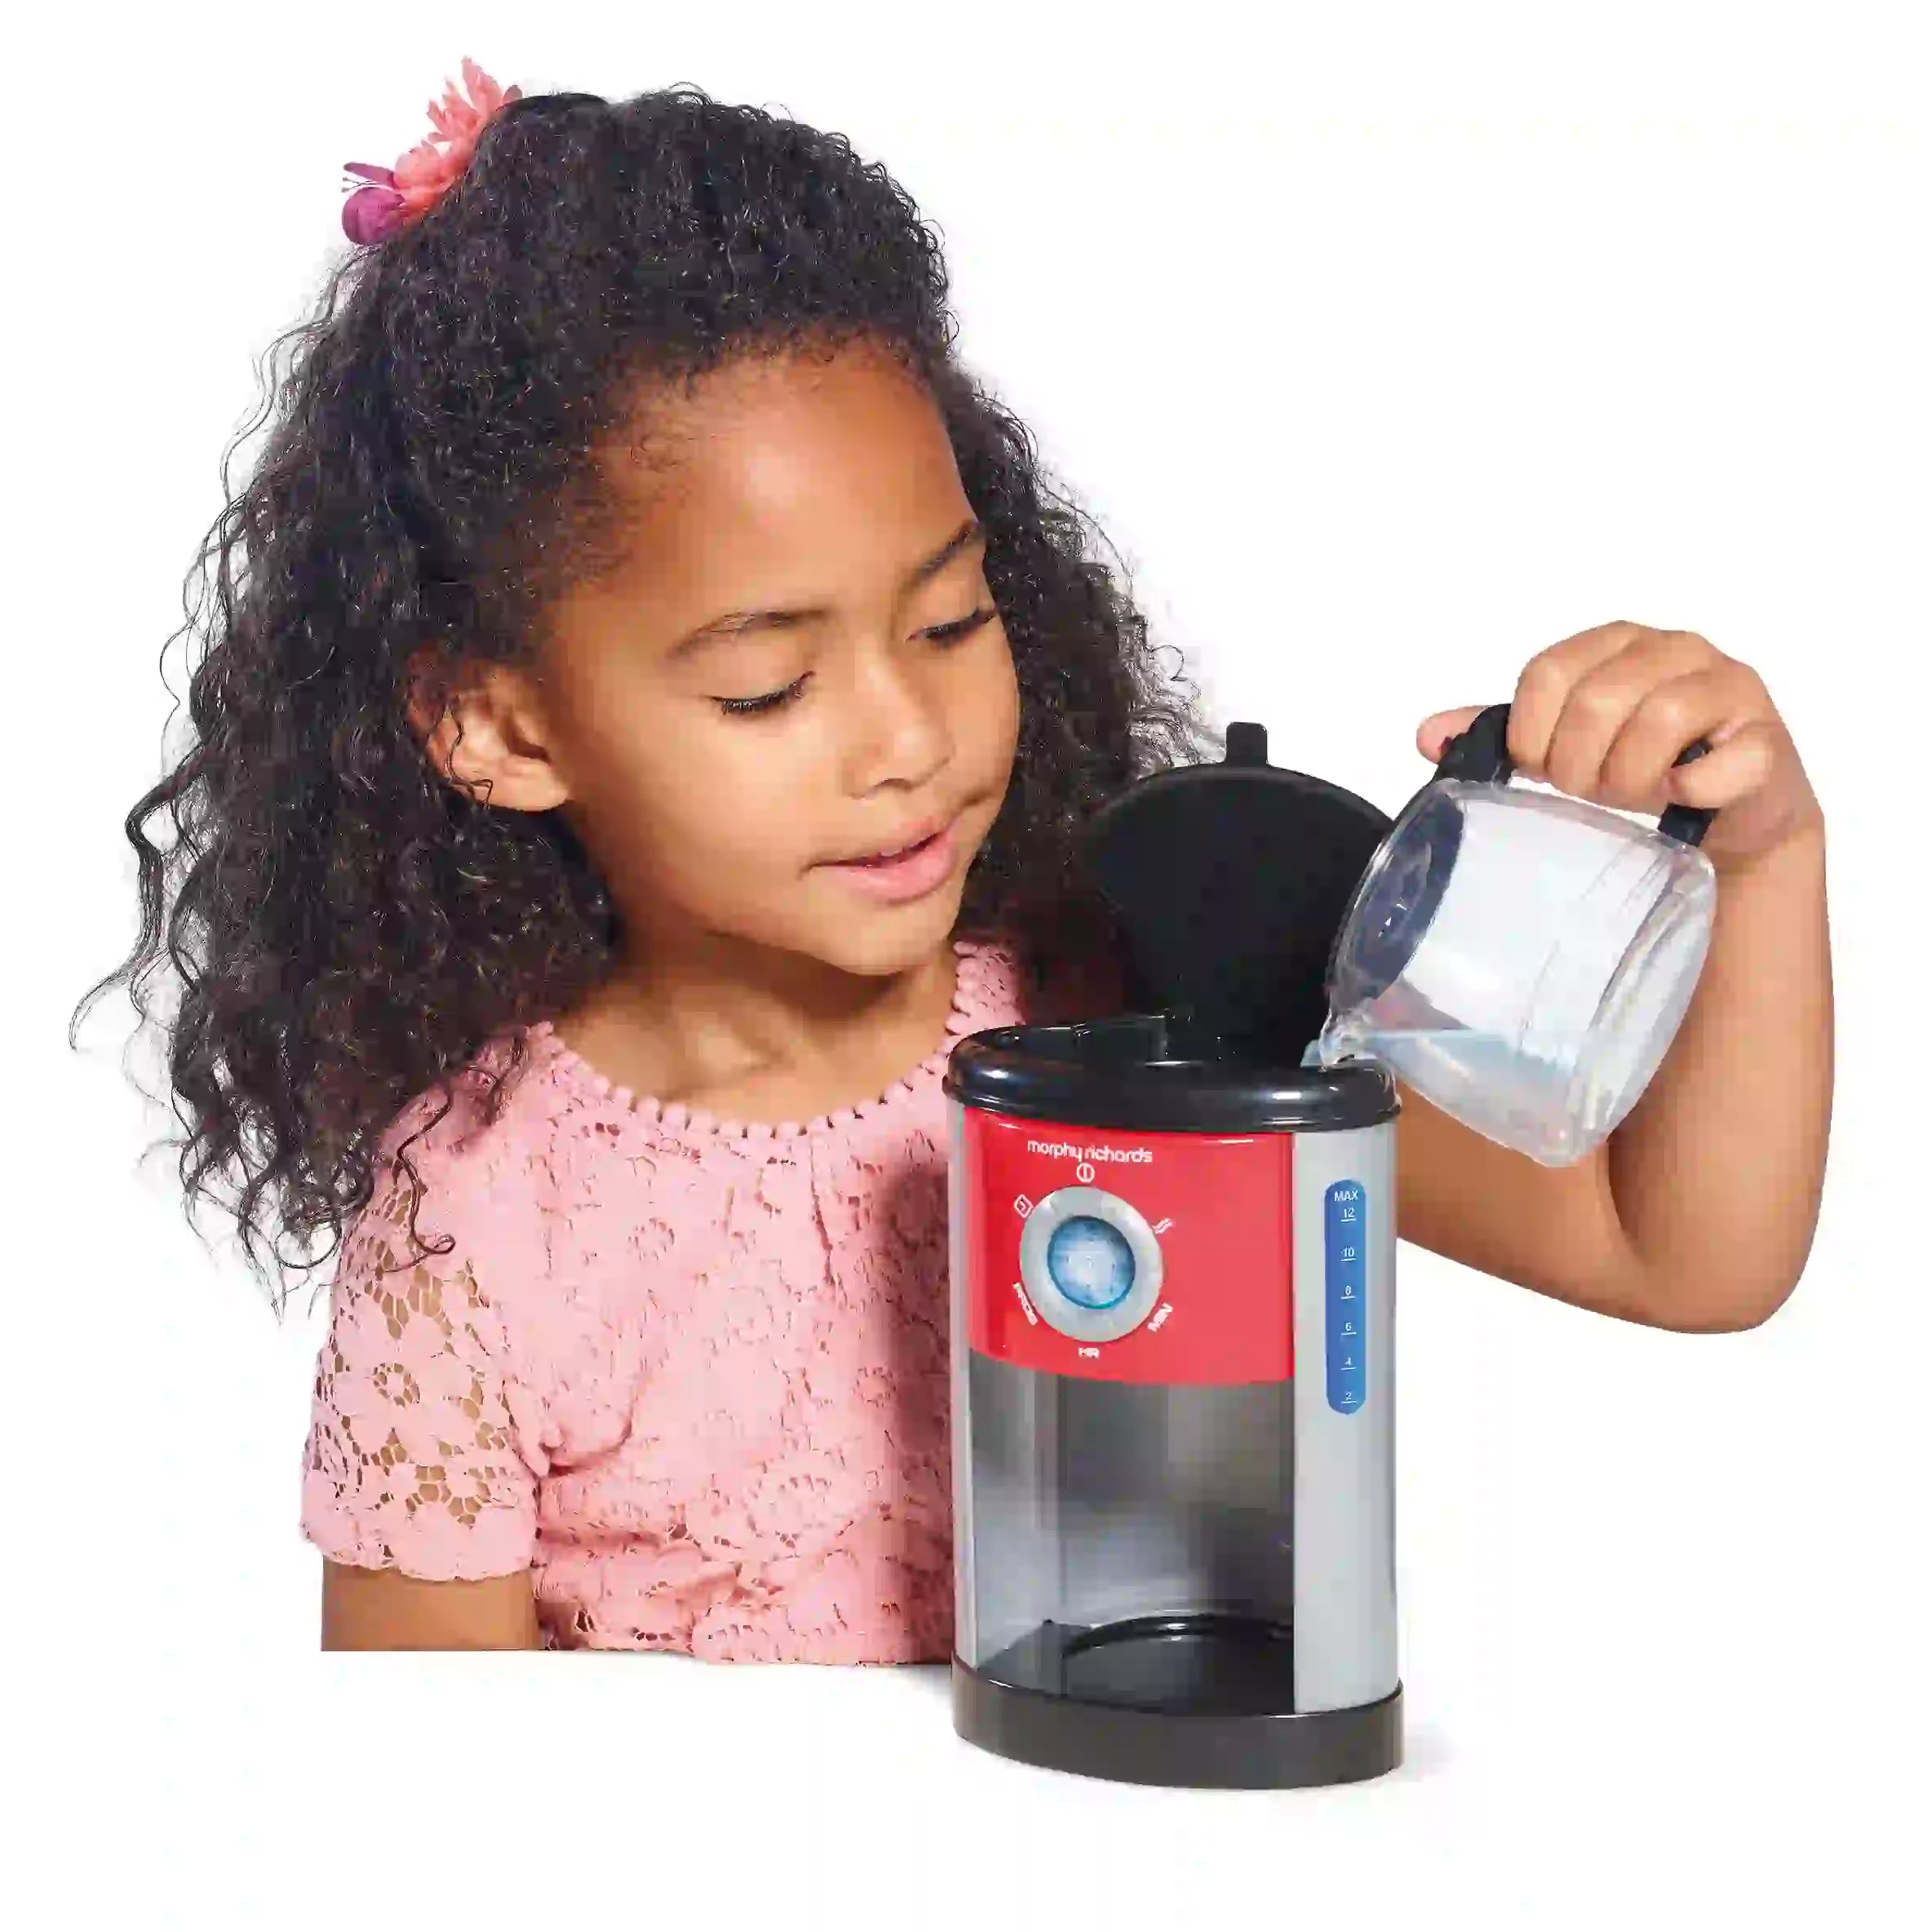 Casdon - Morphy Richards Coffee Machine Toy